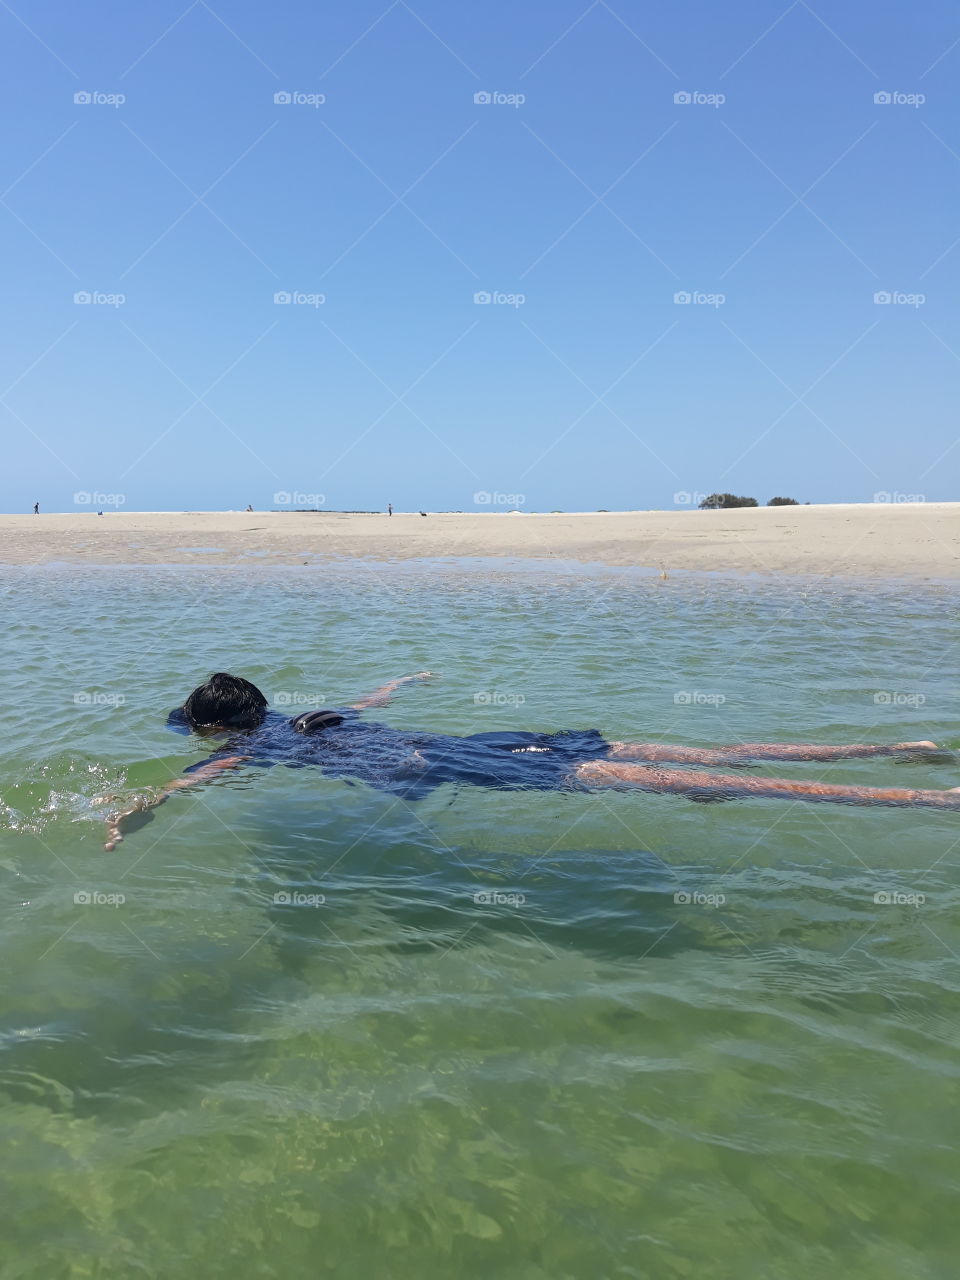 swimming @elliot heads, Qld Australia